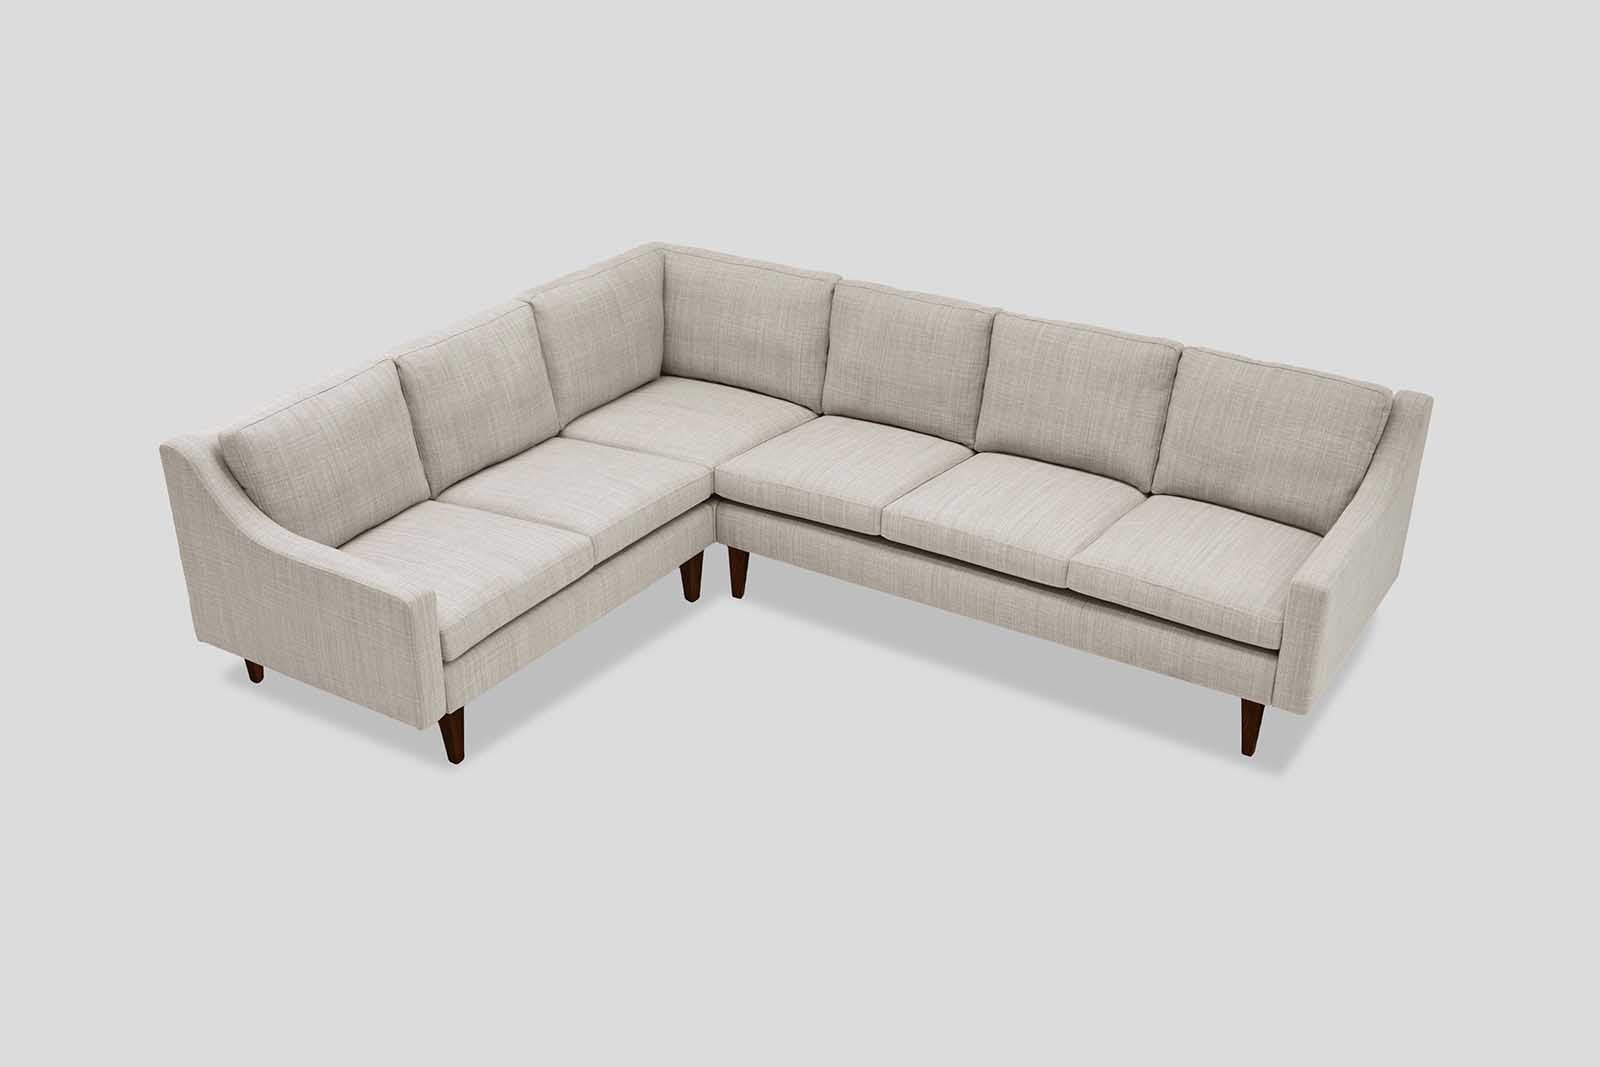 HB02-medium-corner-sofa-coconut-2x3-overhead-treacle